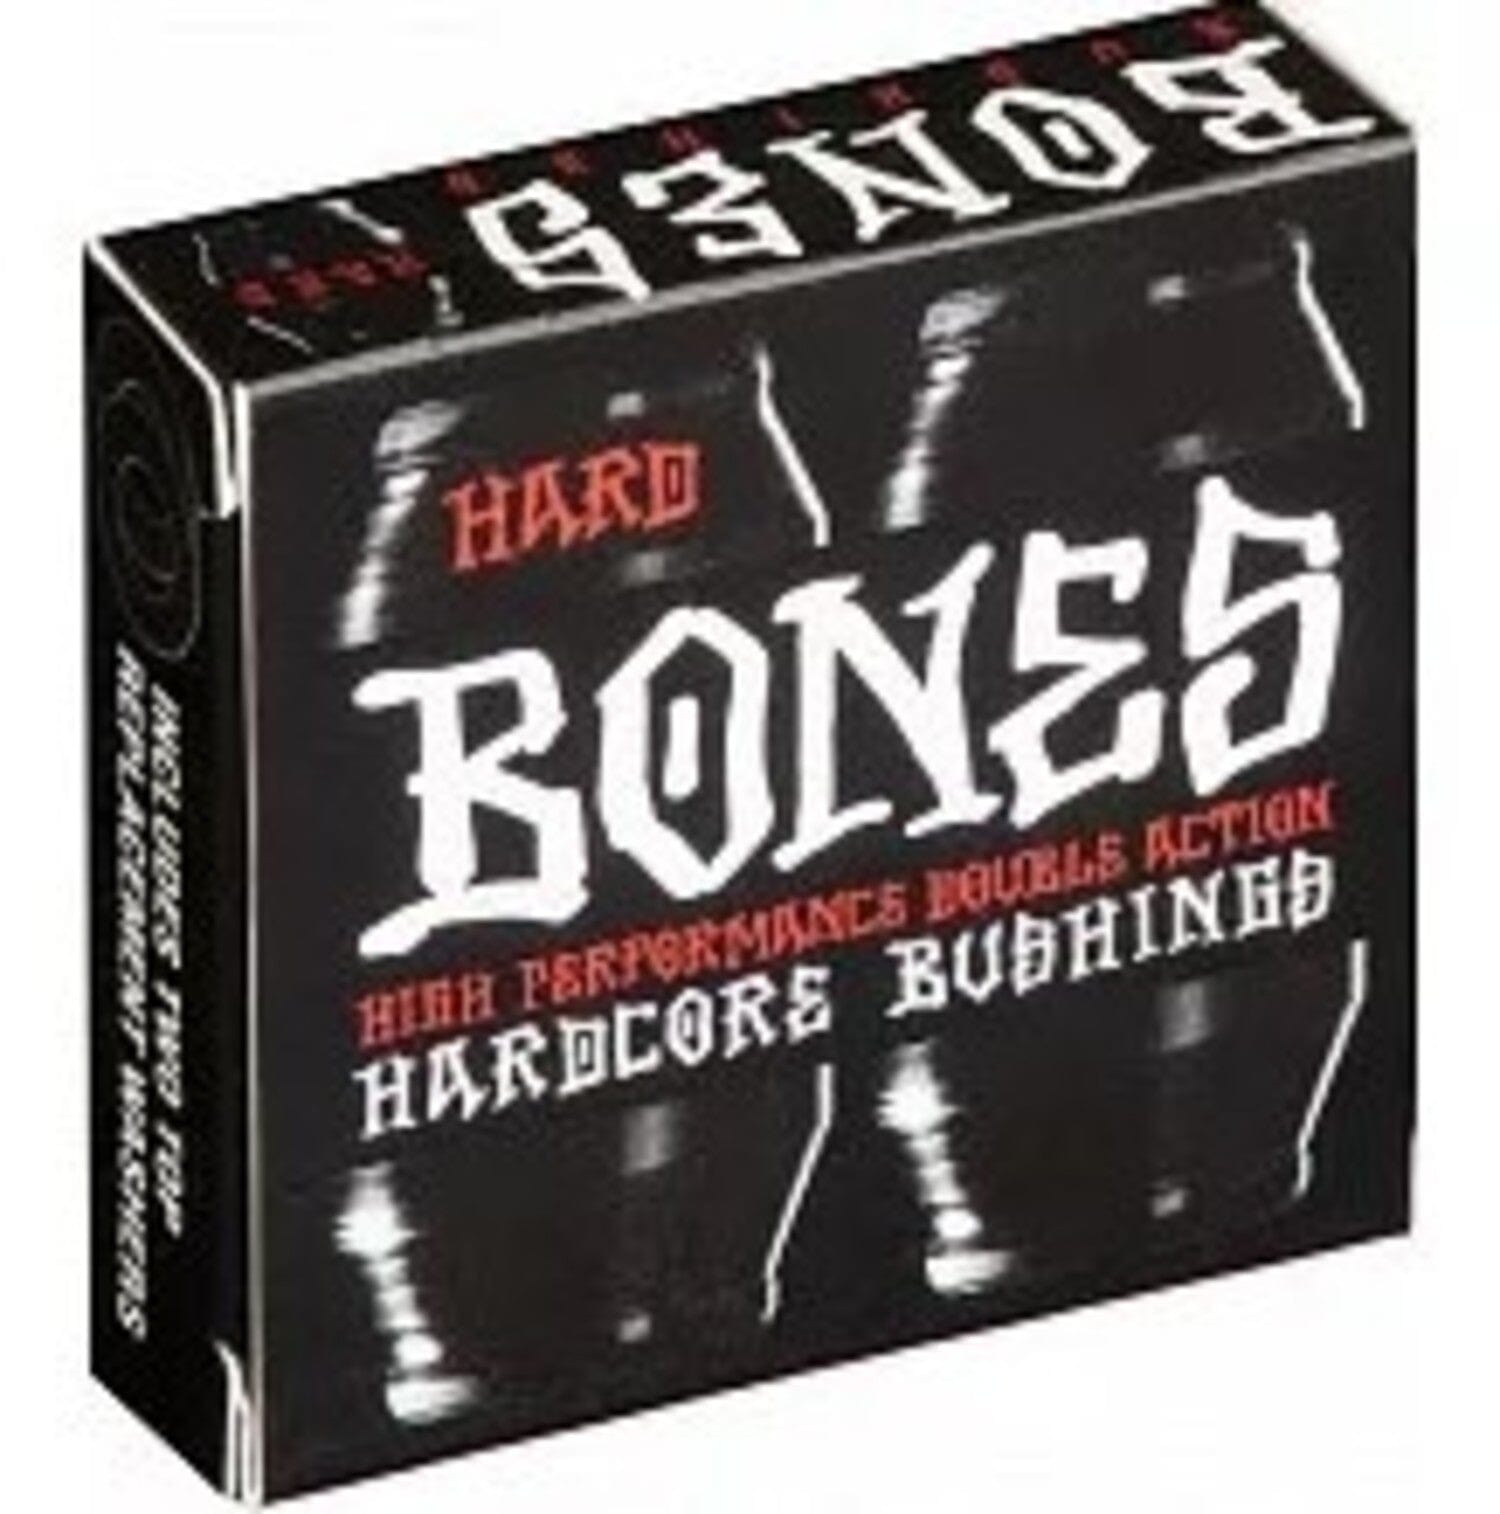 BONES Hard Black Skateboard Bushings Bushings Bones 